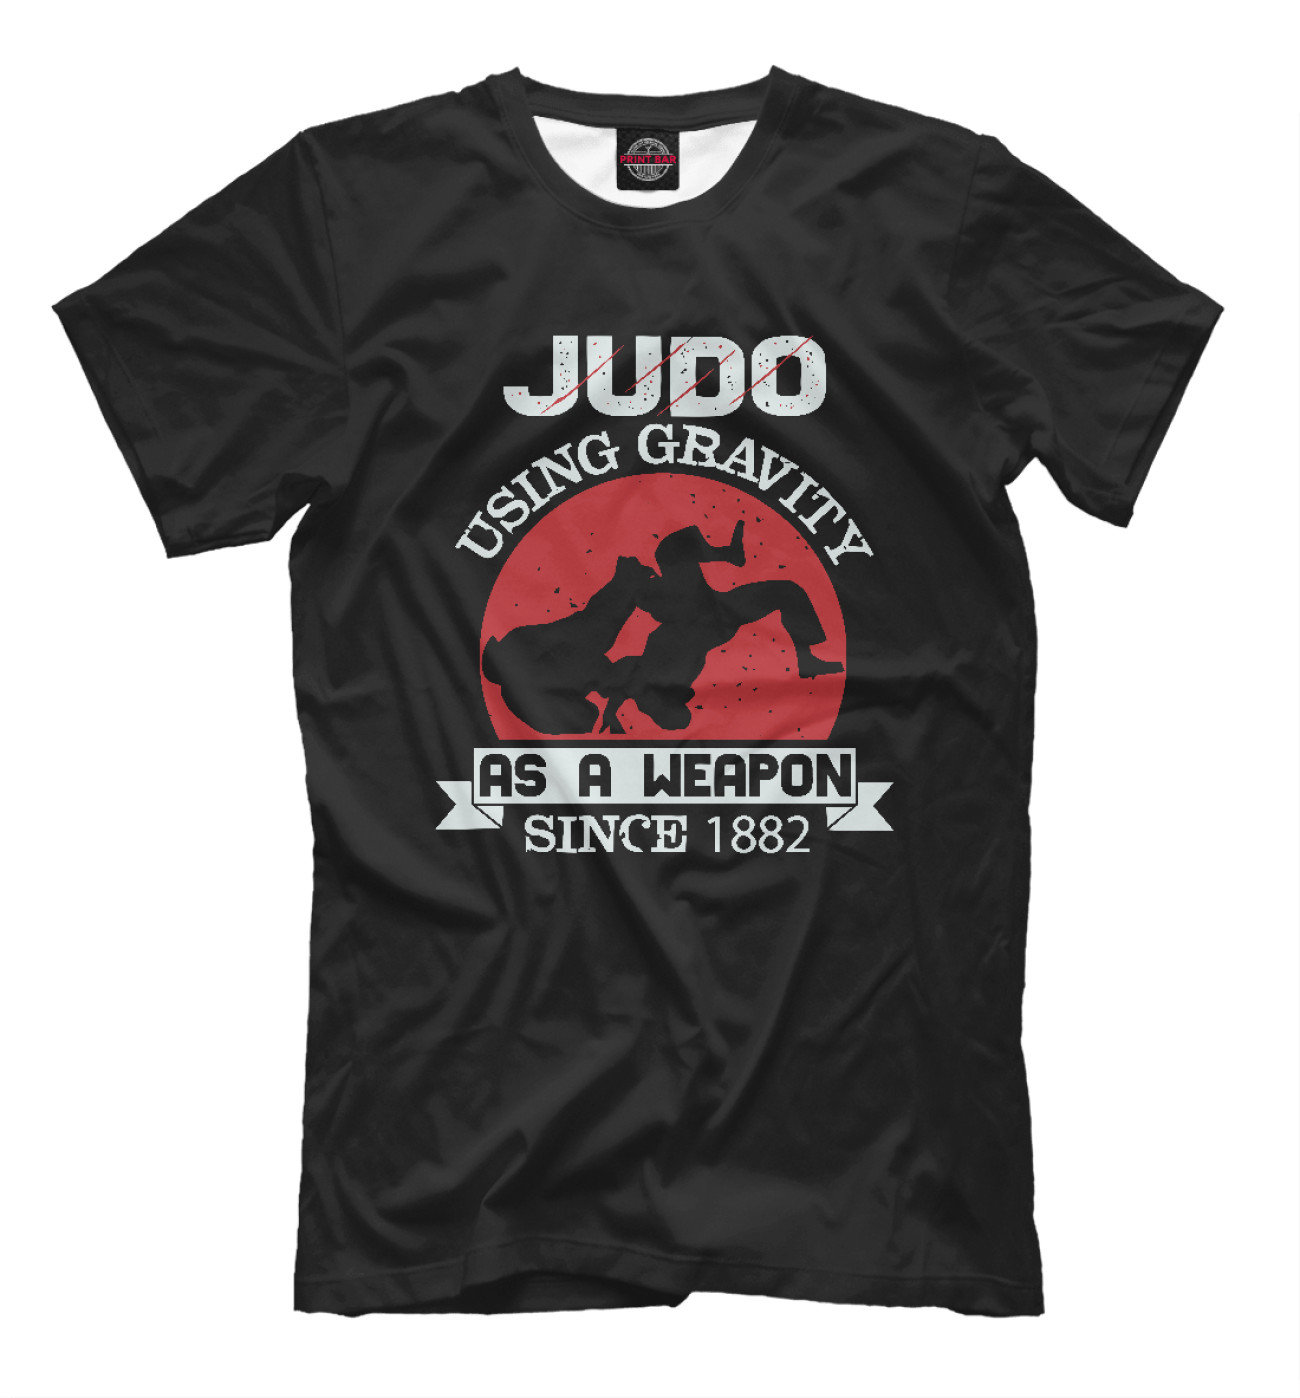 Мужская Футболка Judo 1882, артикул: DZD-940630-fut-2